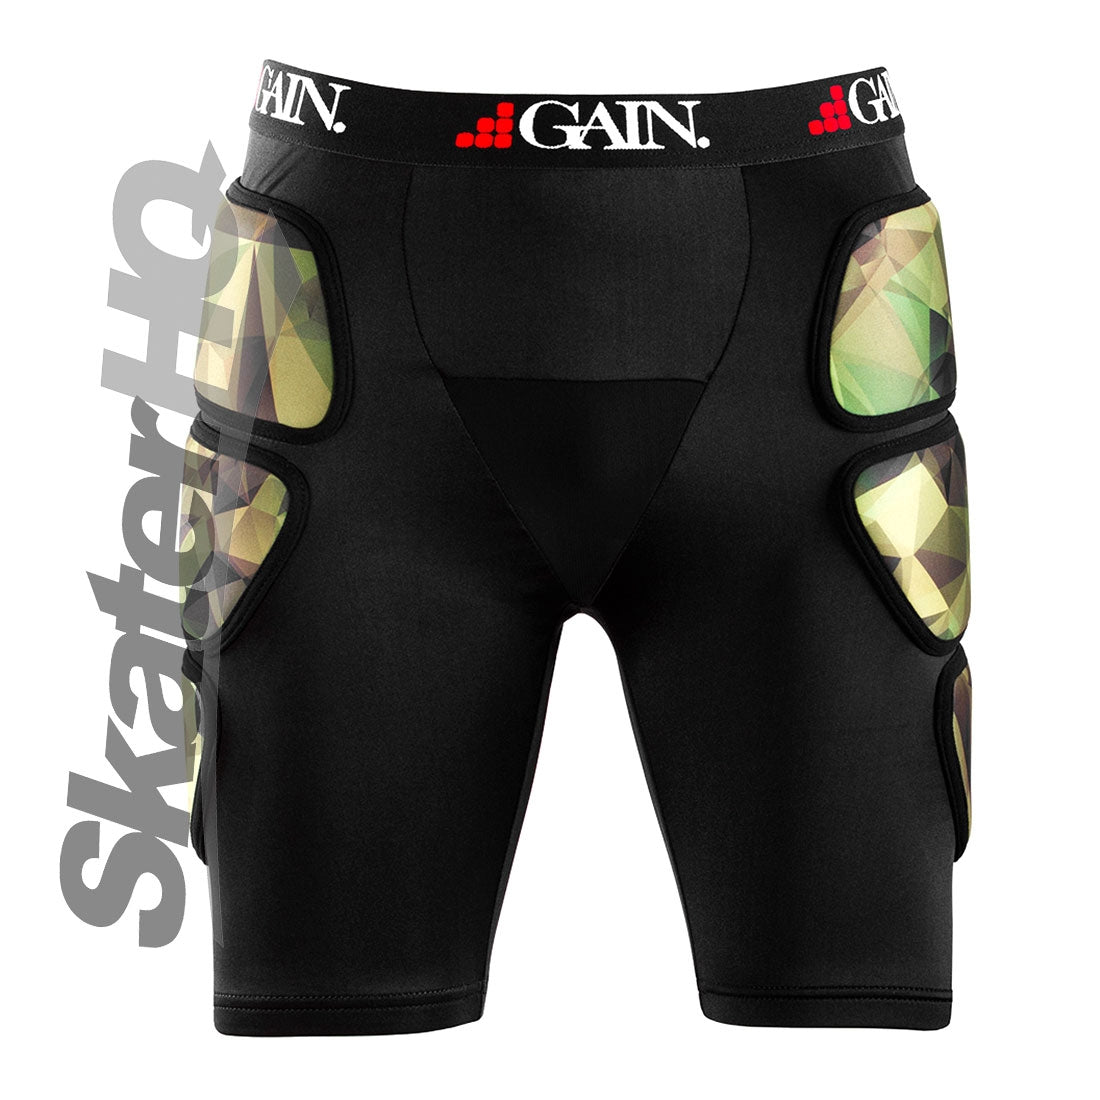 GAIN Sleeper Hip/Bum Pads - Camo - M Protective Gear